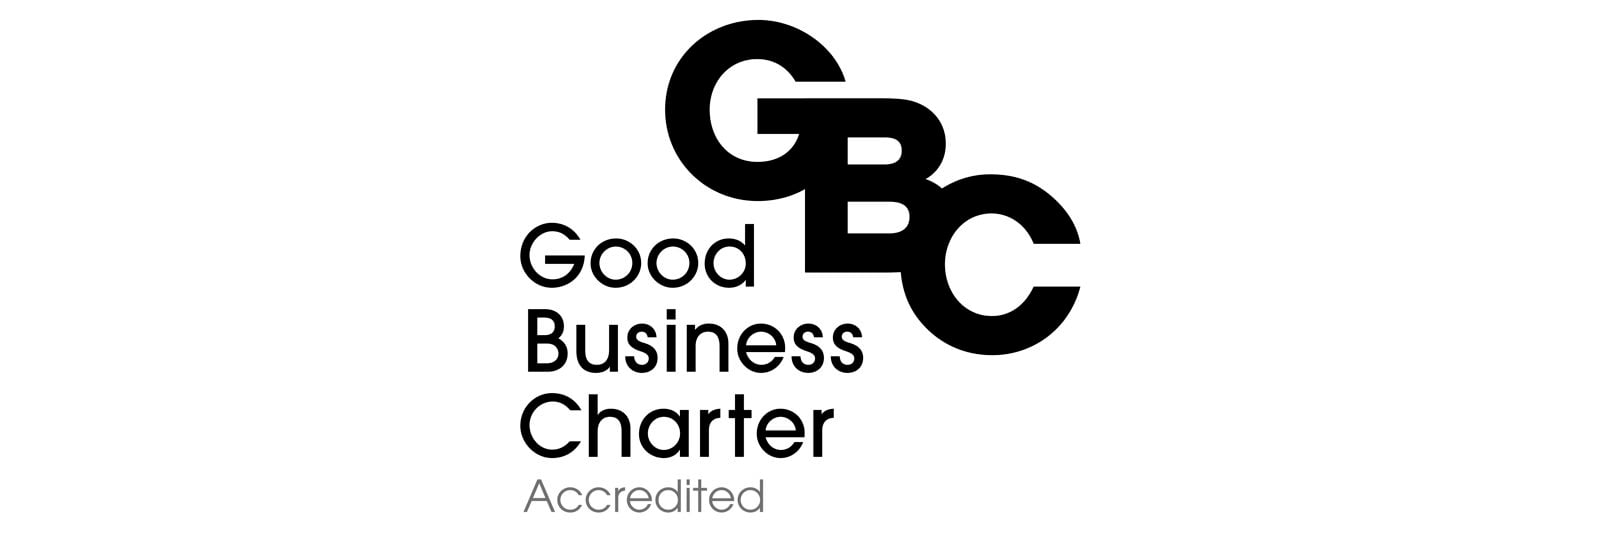 GBC-accredited-logo-wide